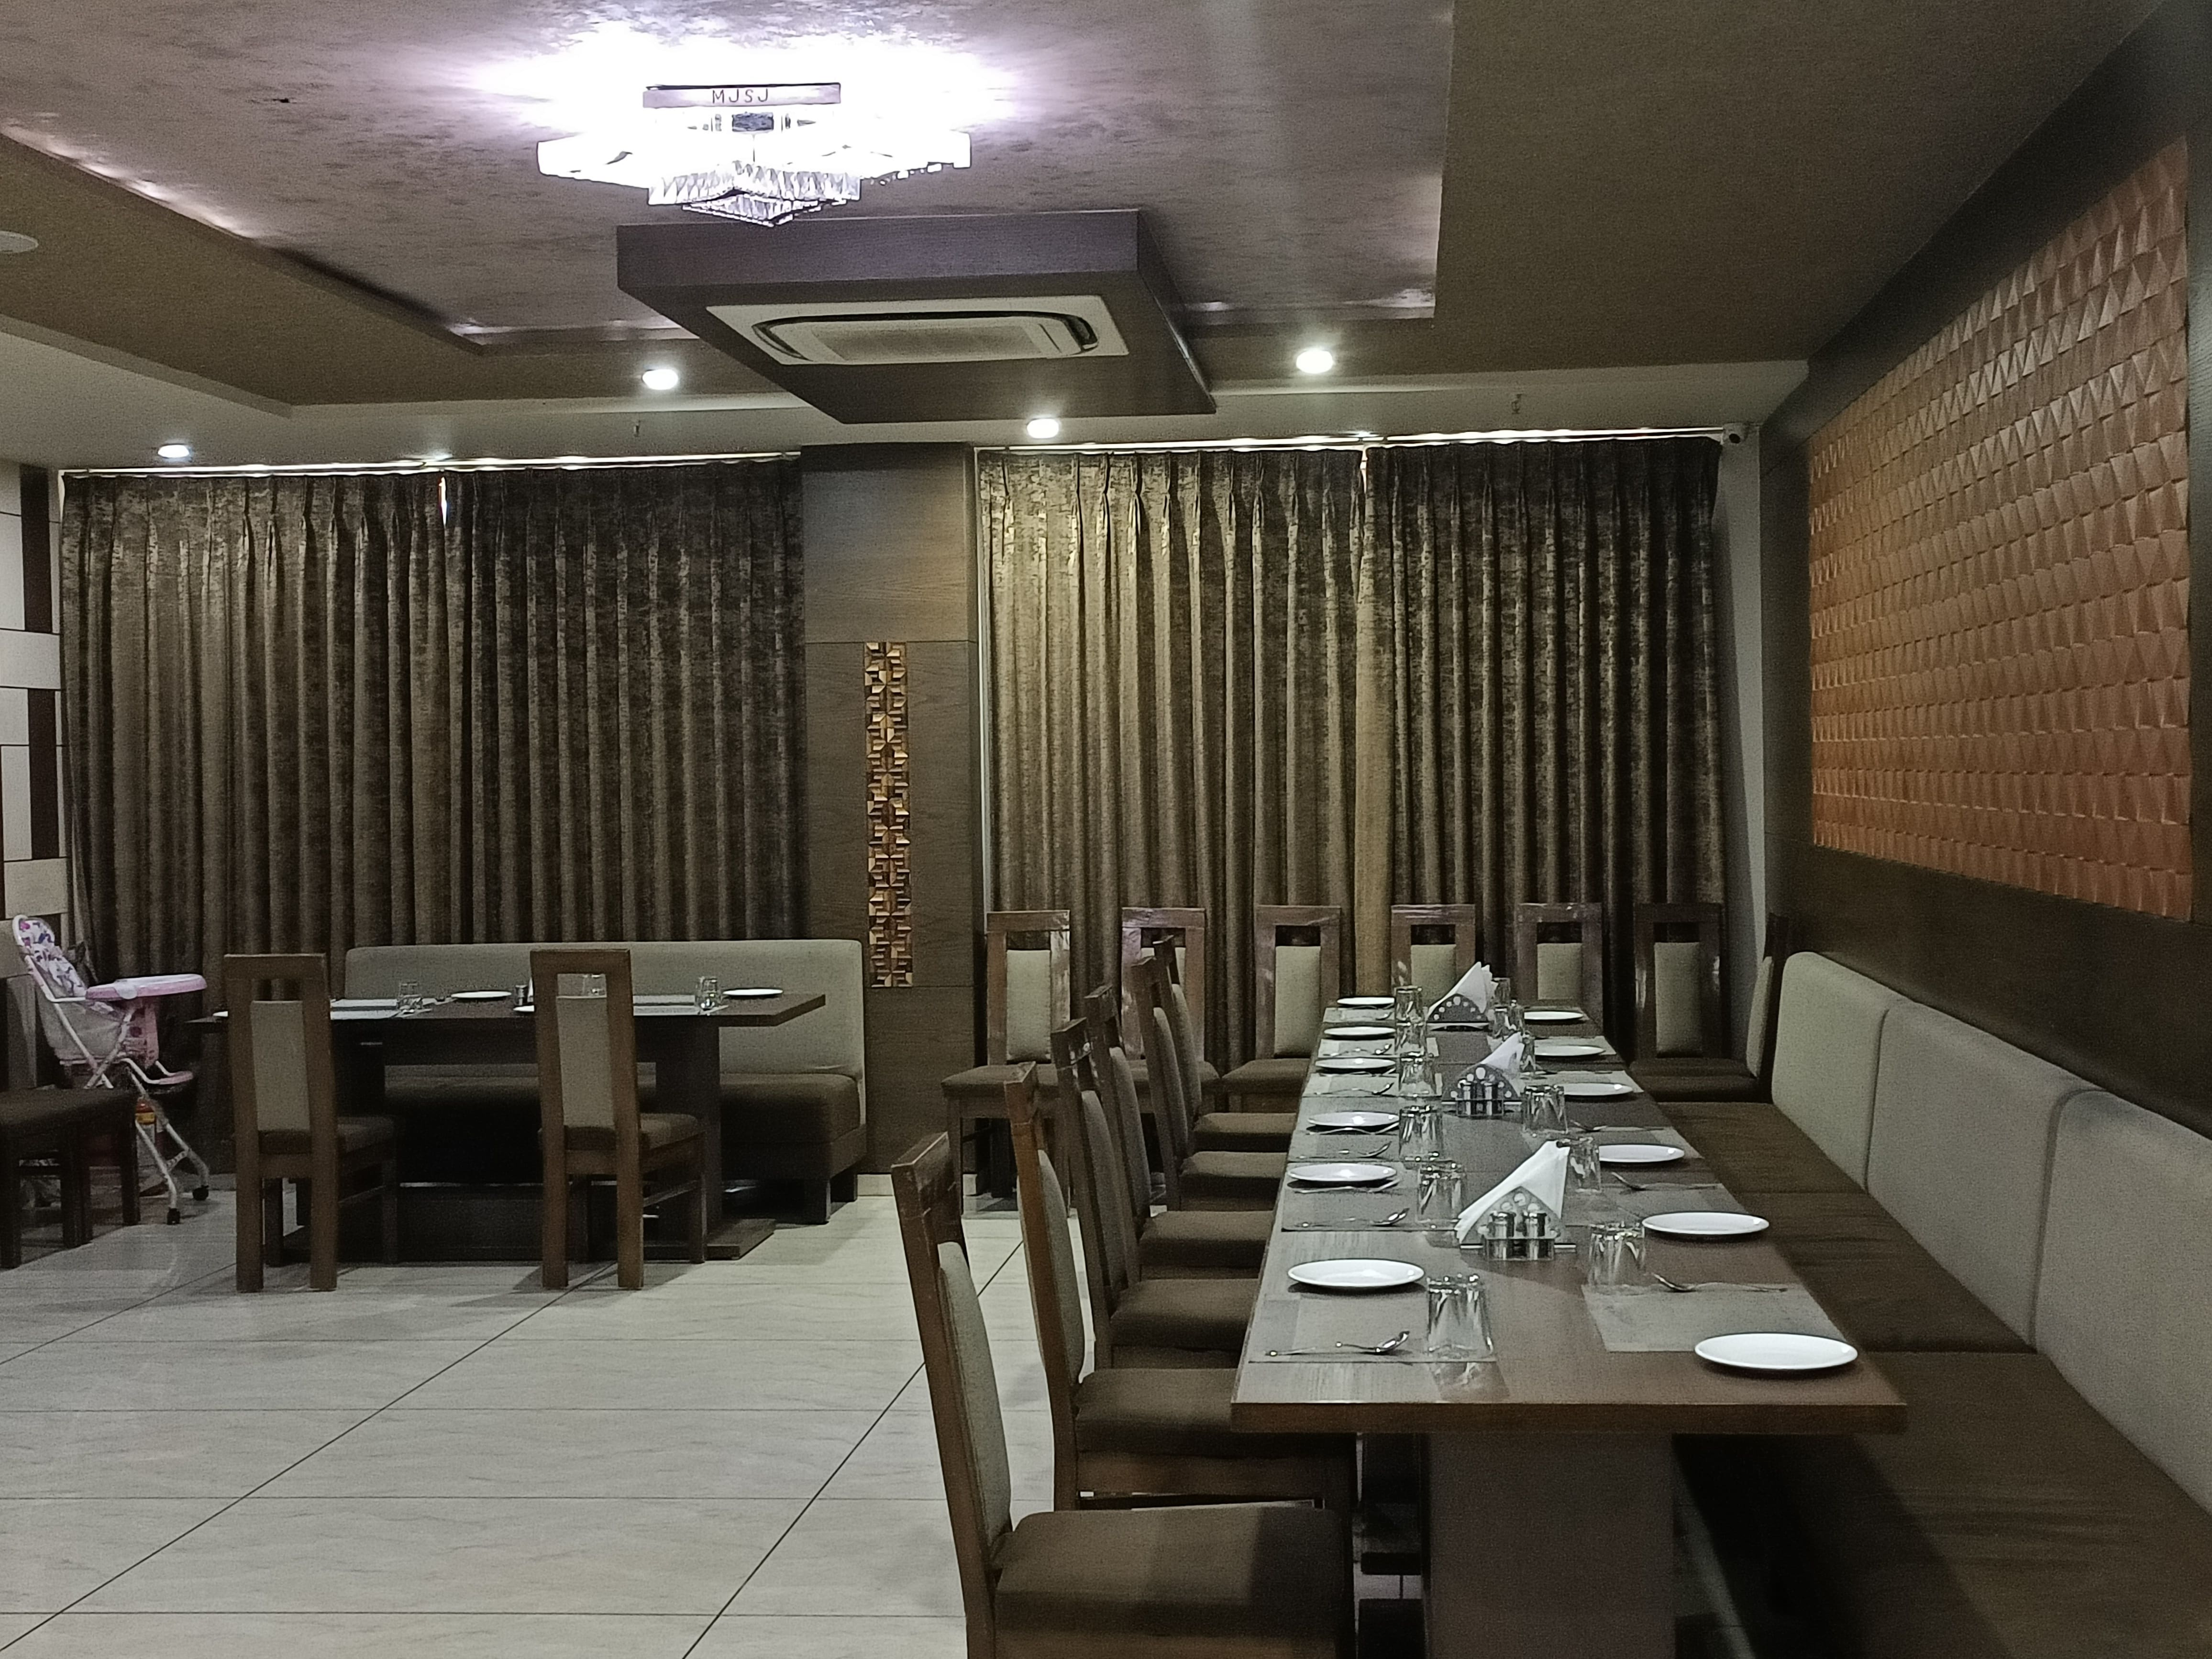 Khushi Palace Hotel Ahmedabad Price, Reviews, Photos & Address